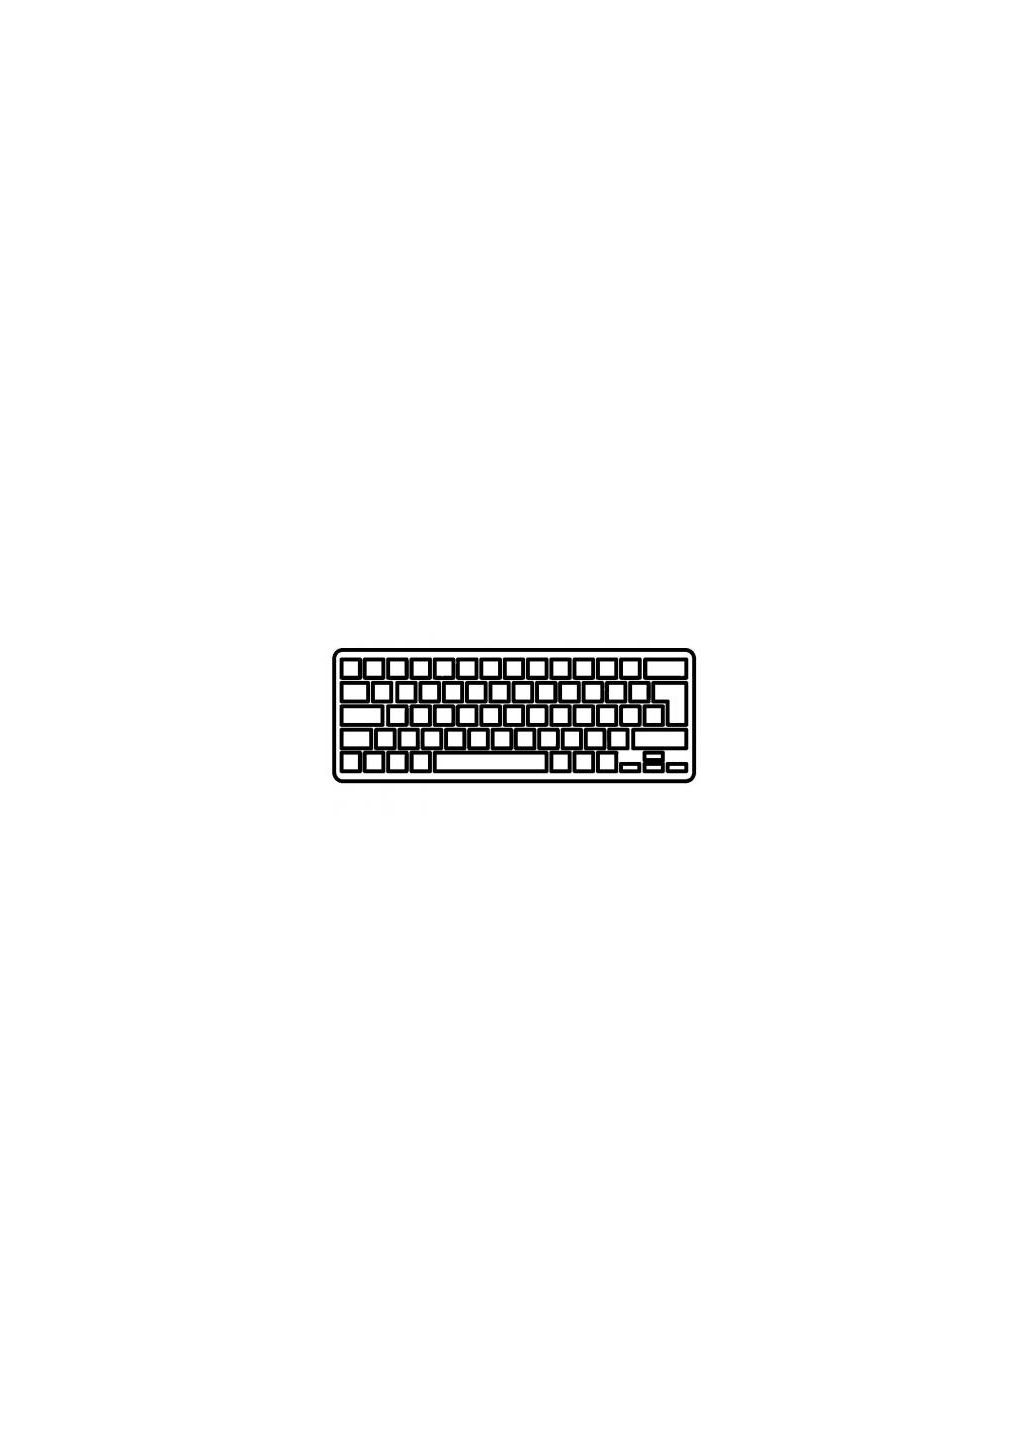 Клавиатура ноутбука V1/V1J/V1Jp/V1S/V1S1A/V2/VX2/Lamborgini VX1 черная RU (A43482) Asus v1/v1j/v1jp/v1s/v1s-1a/v2/vx2/lamborgini vx1 черна (276707875)